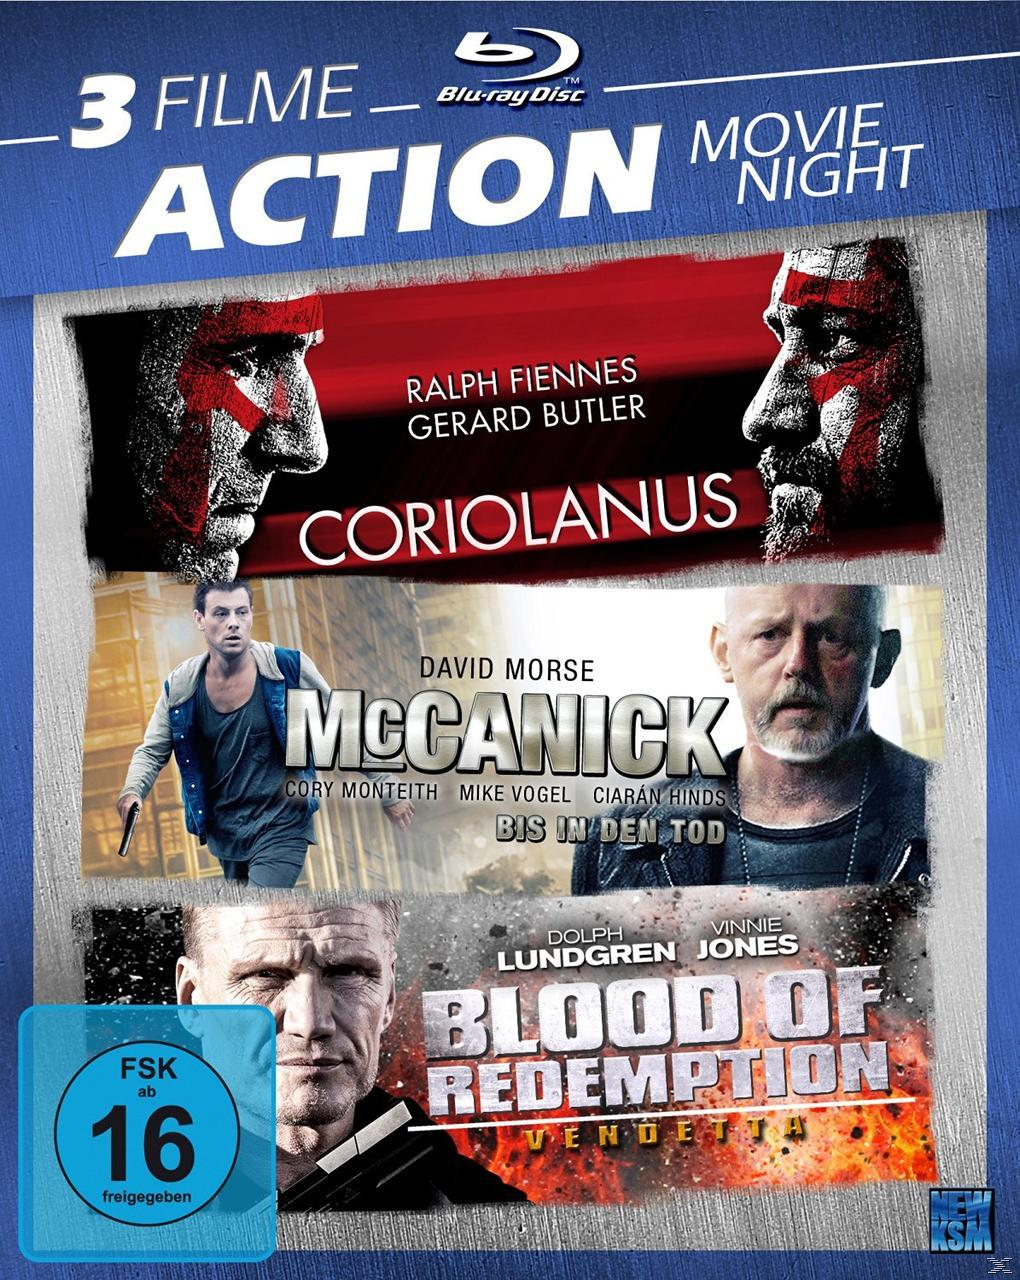 3 Filme Action Movie / Coriolanus / Blood Night Redemption Blu-ray of McCarnick 